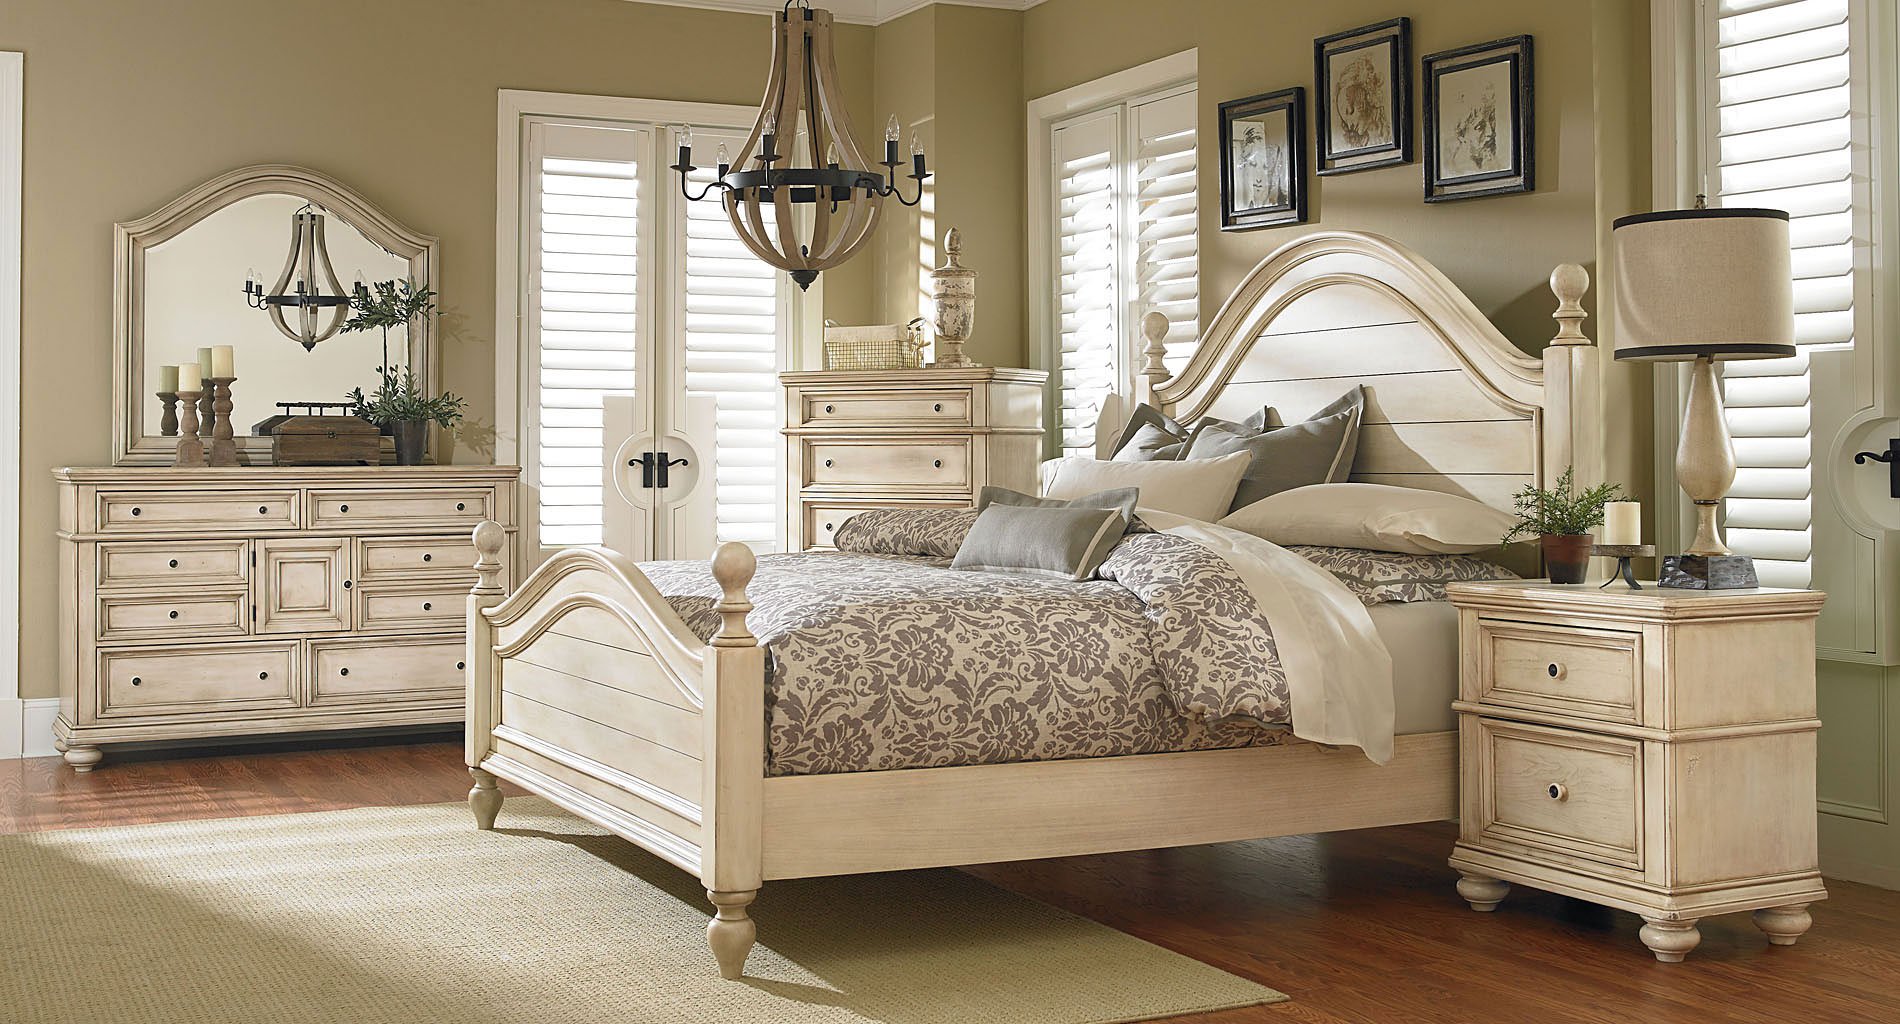 chateau bedroom furniture range